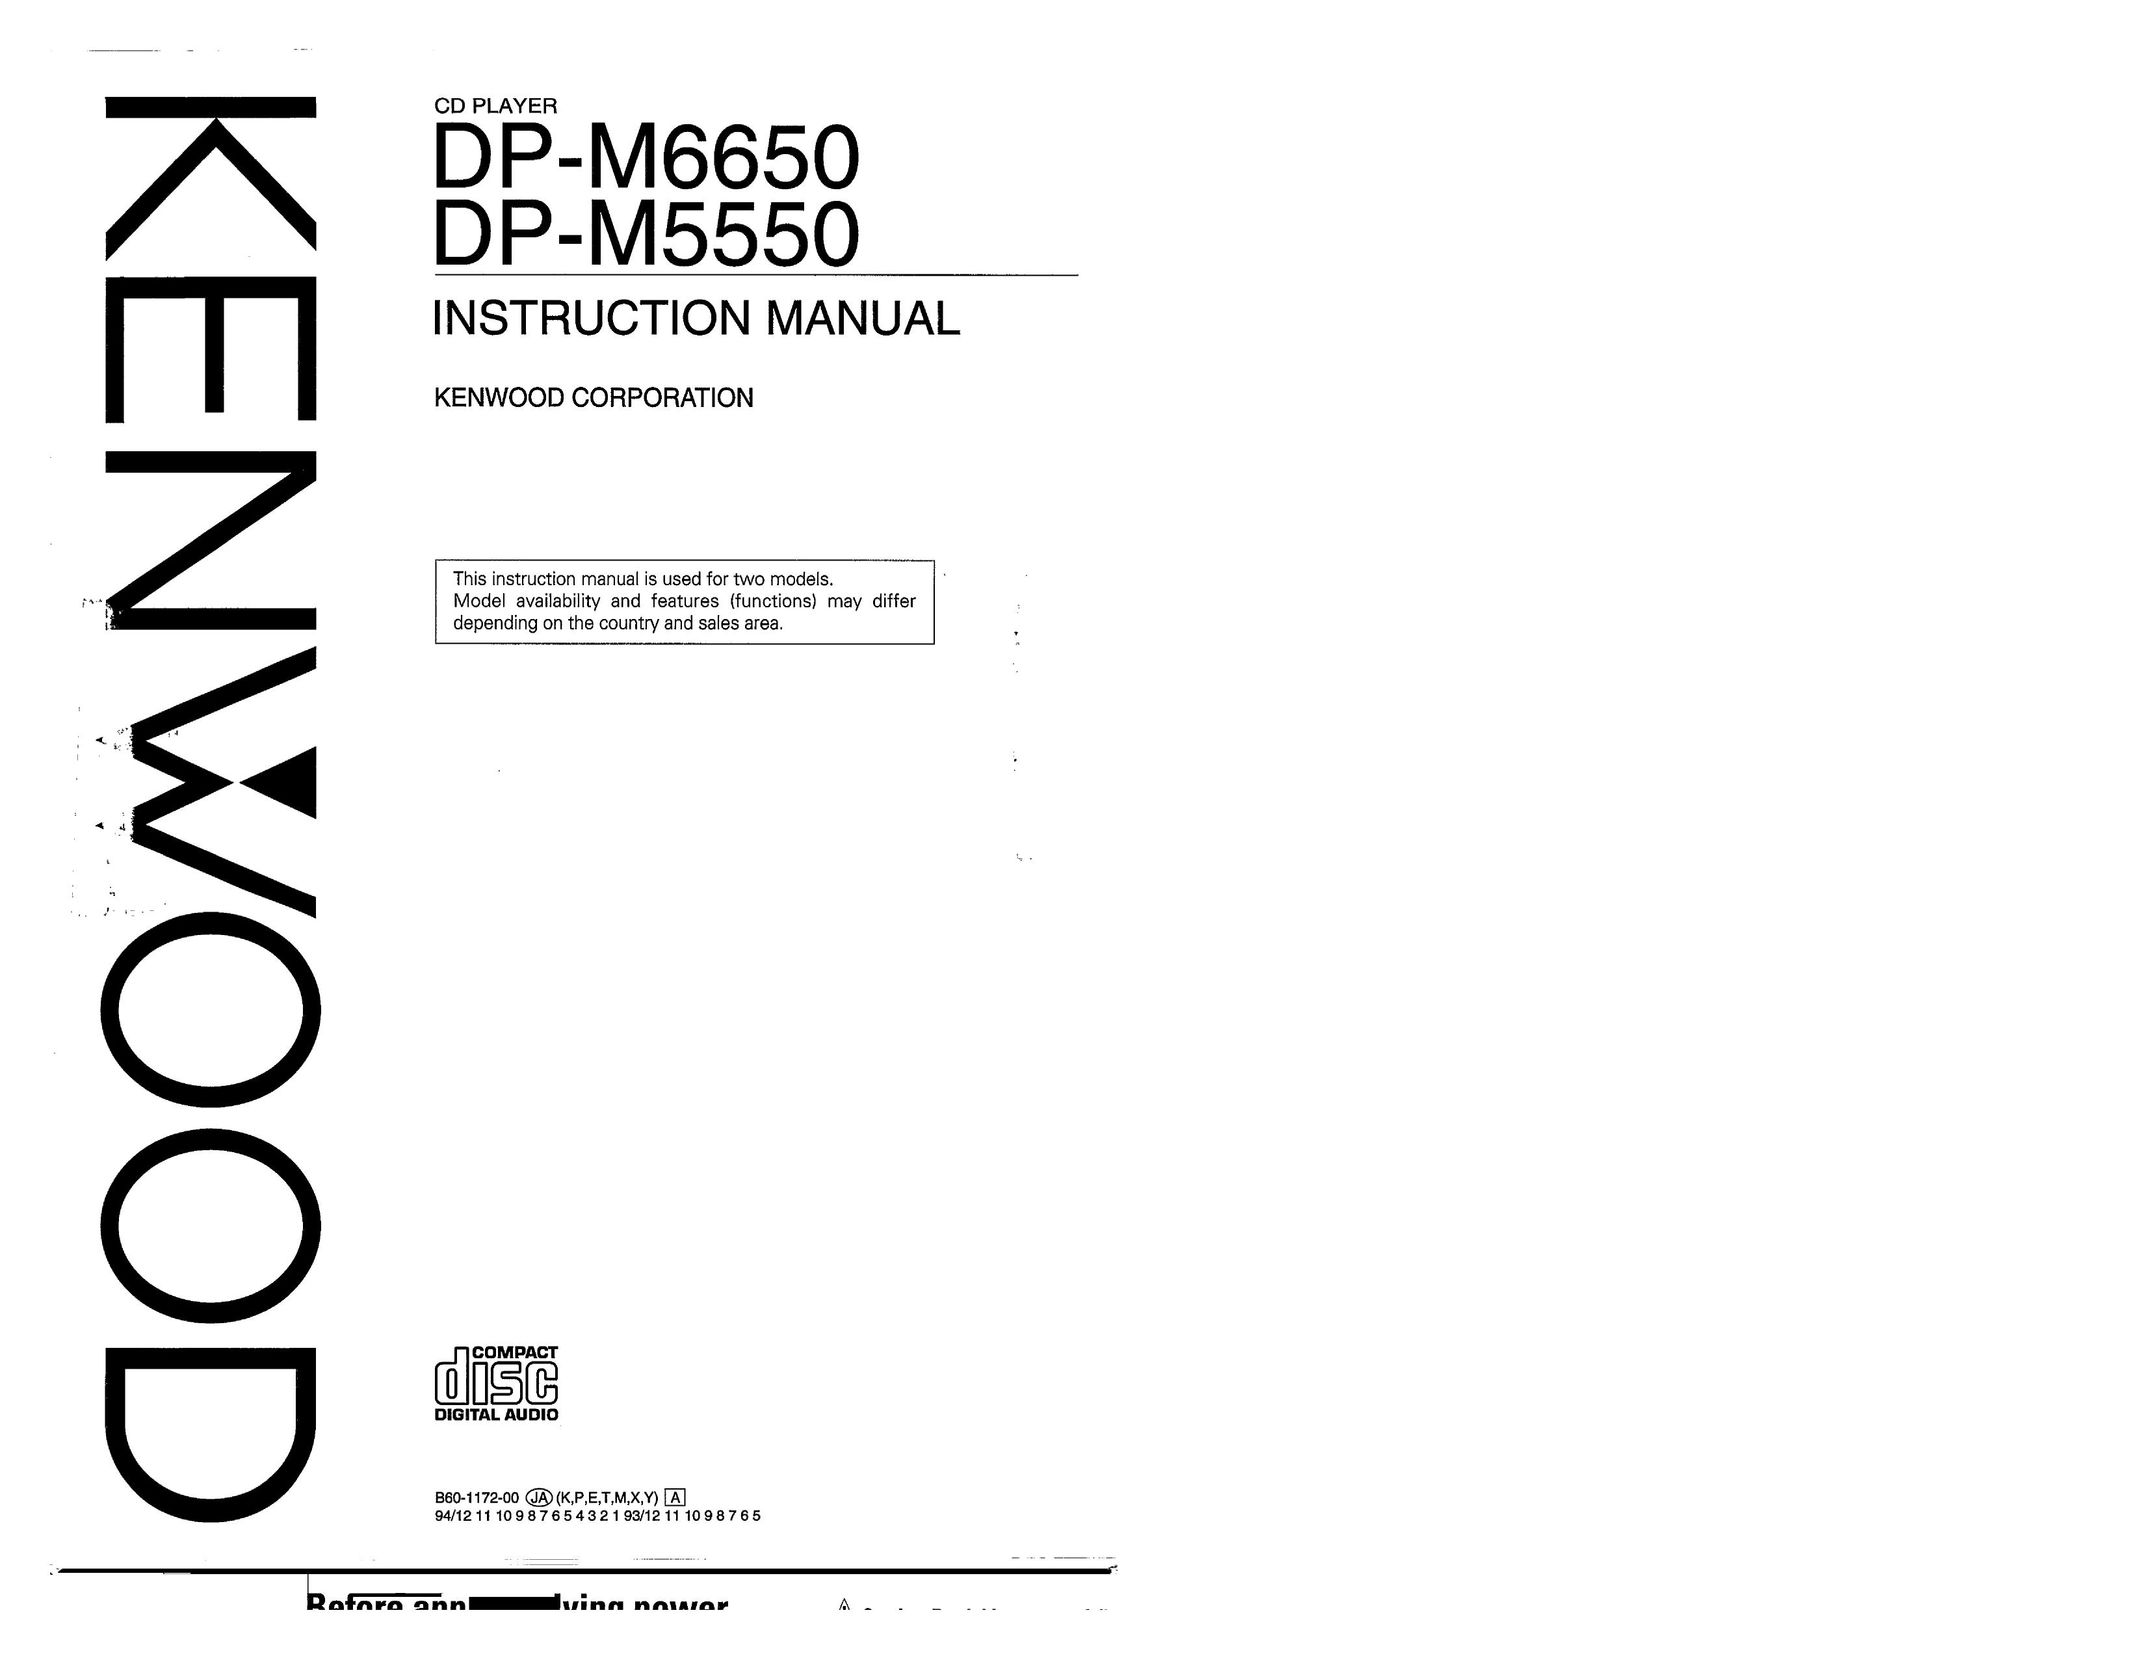 Kenwood DP-M6650 CD Player User Manual